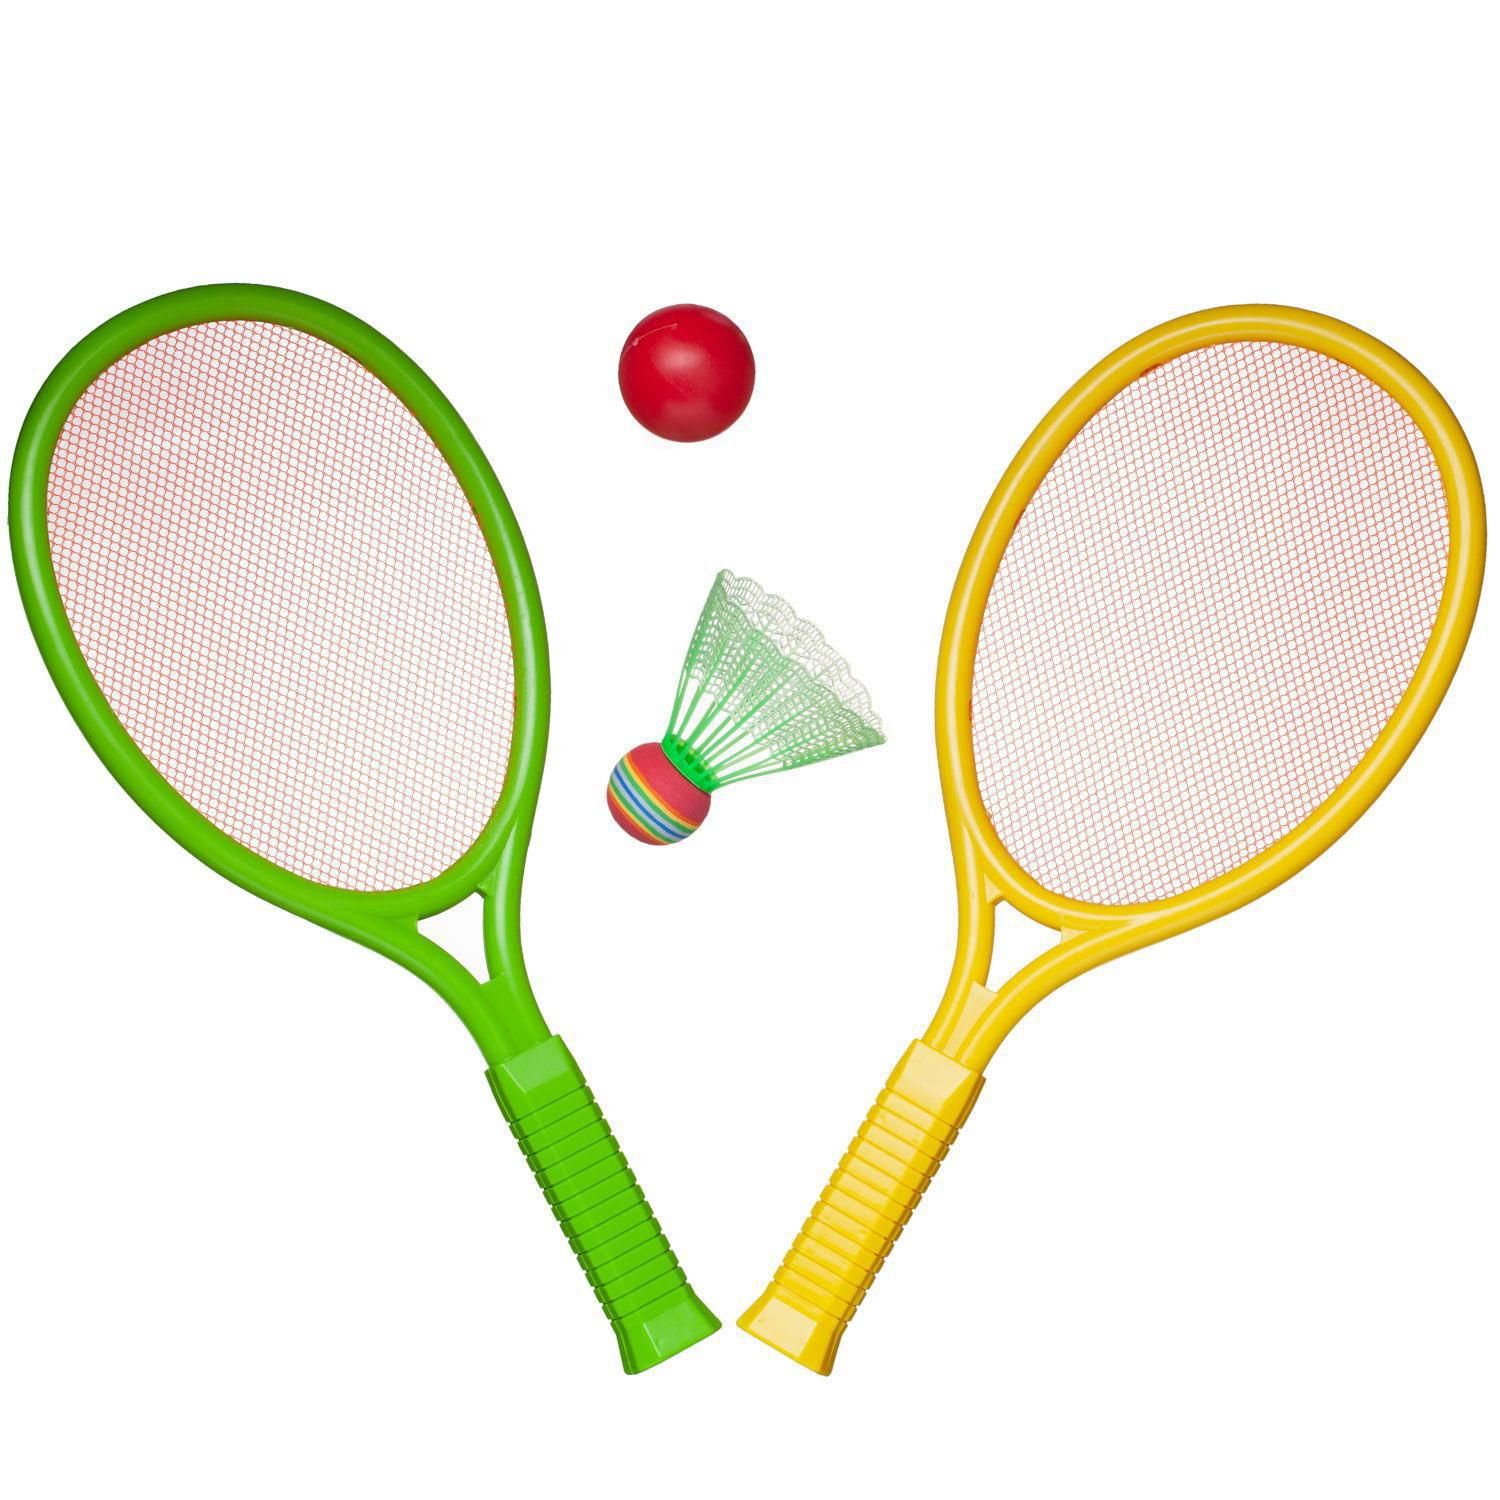 Спортивная игра ABtoys Бадминтон и теннис 2в1 в комплекте 2 ракетки, мяч и воланчик